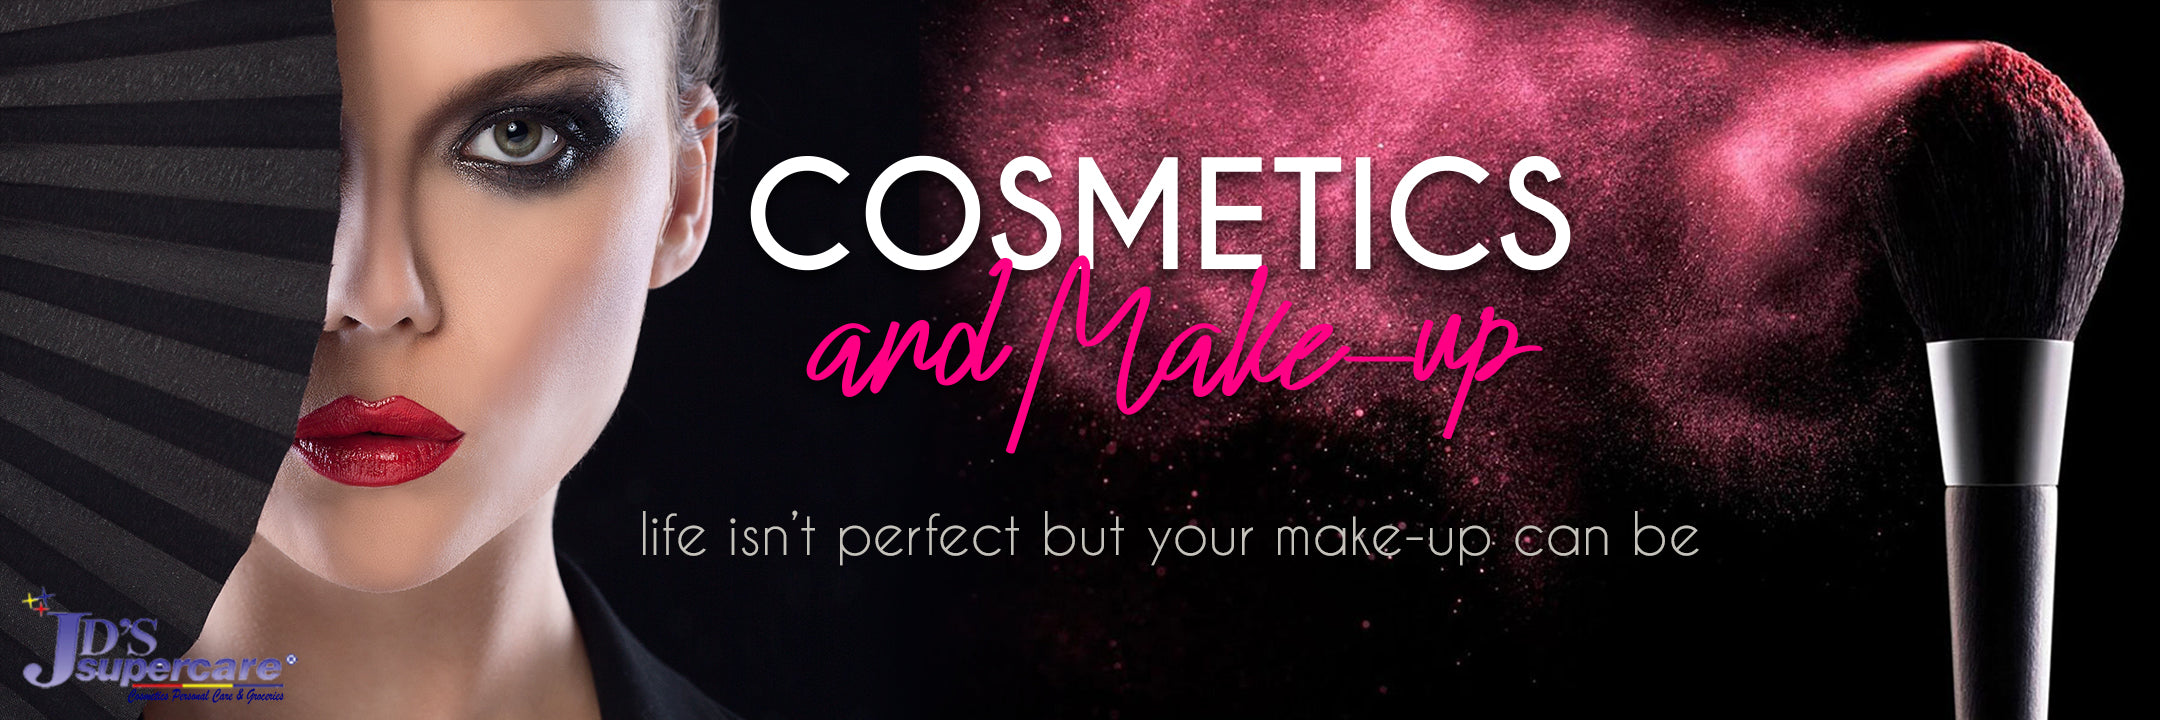 Cosmetic & Makeup